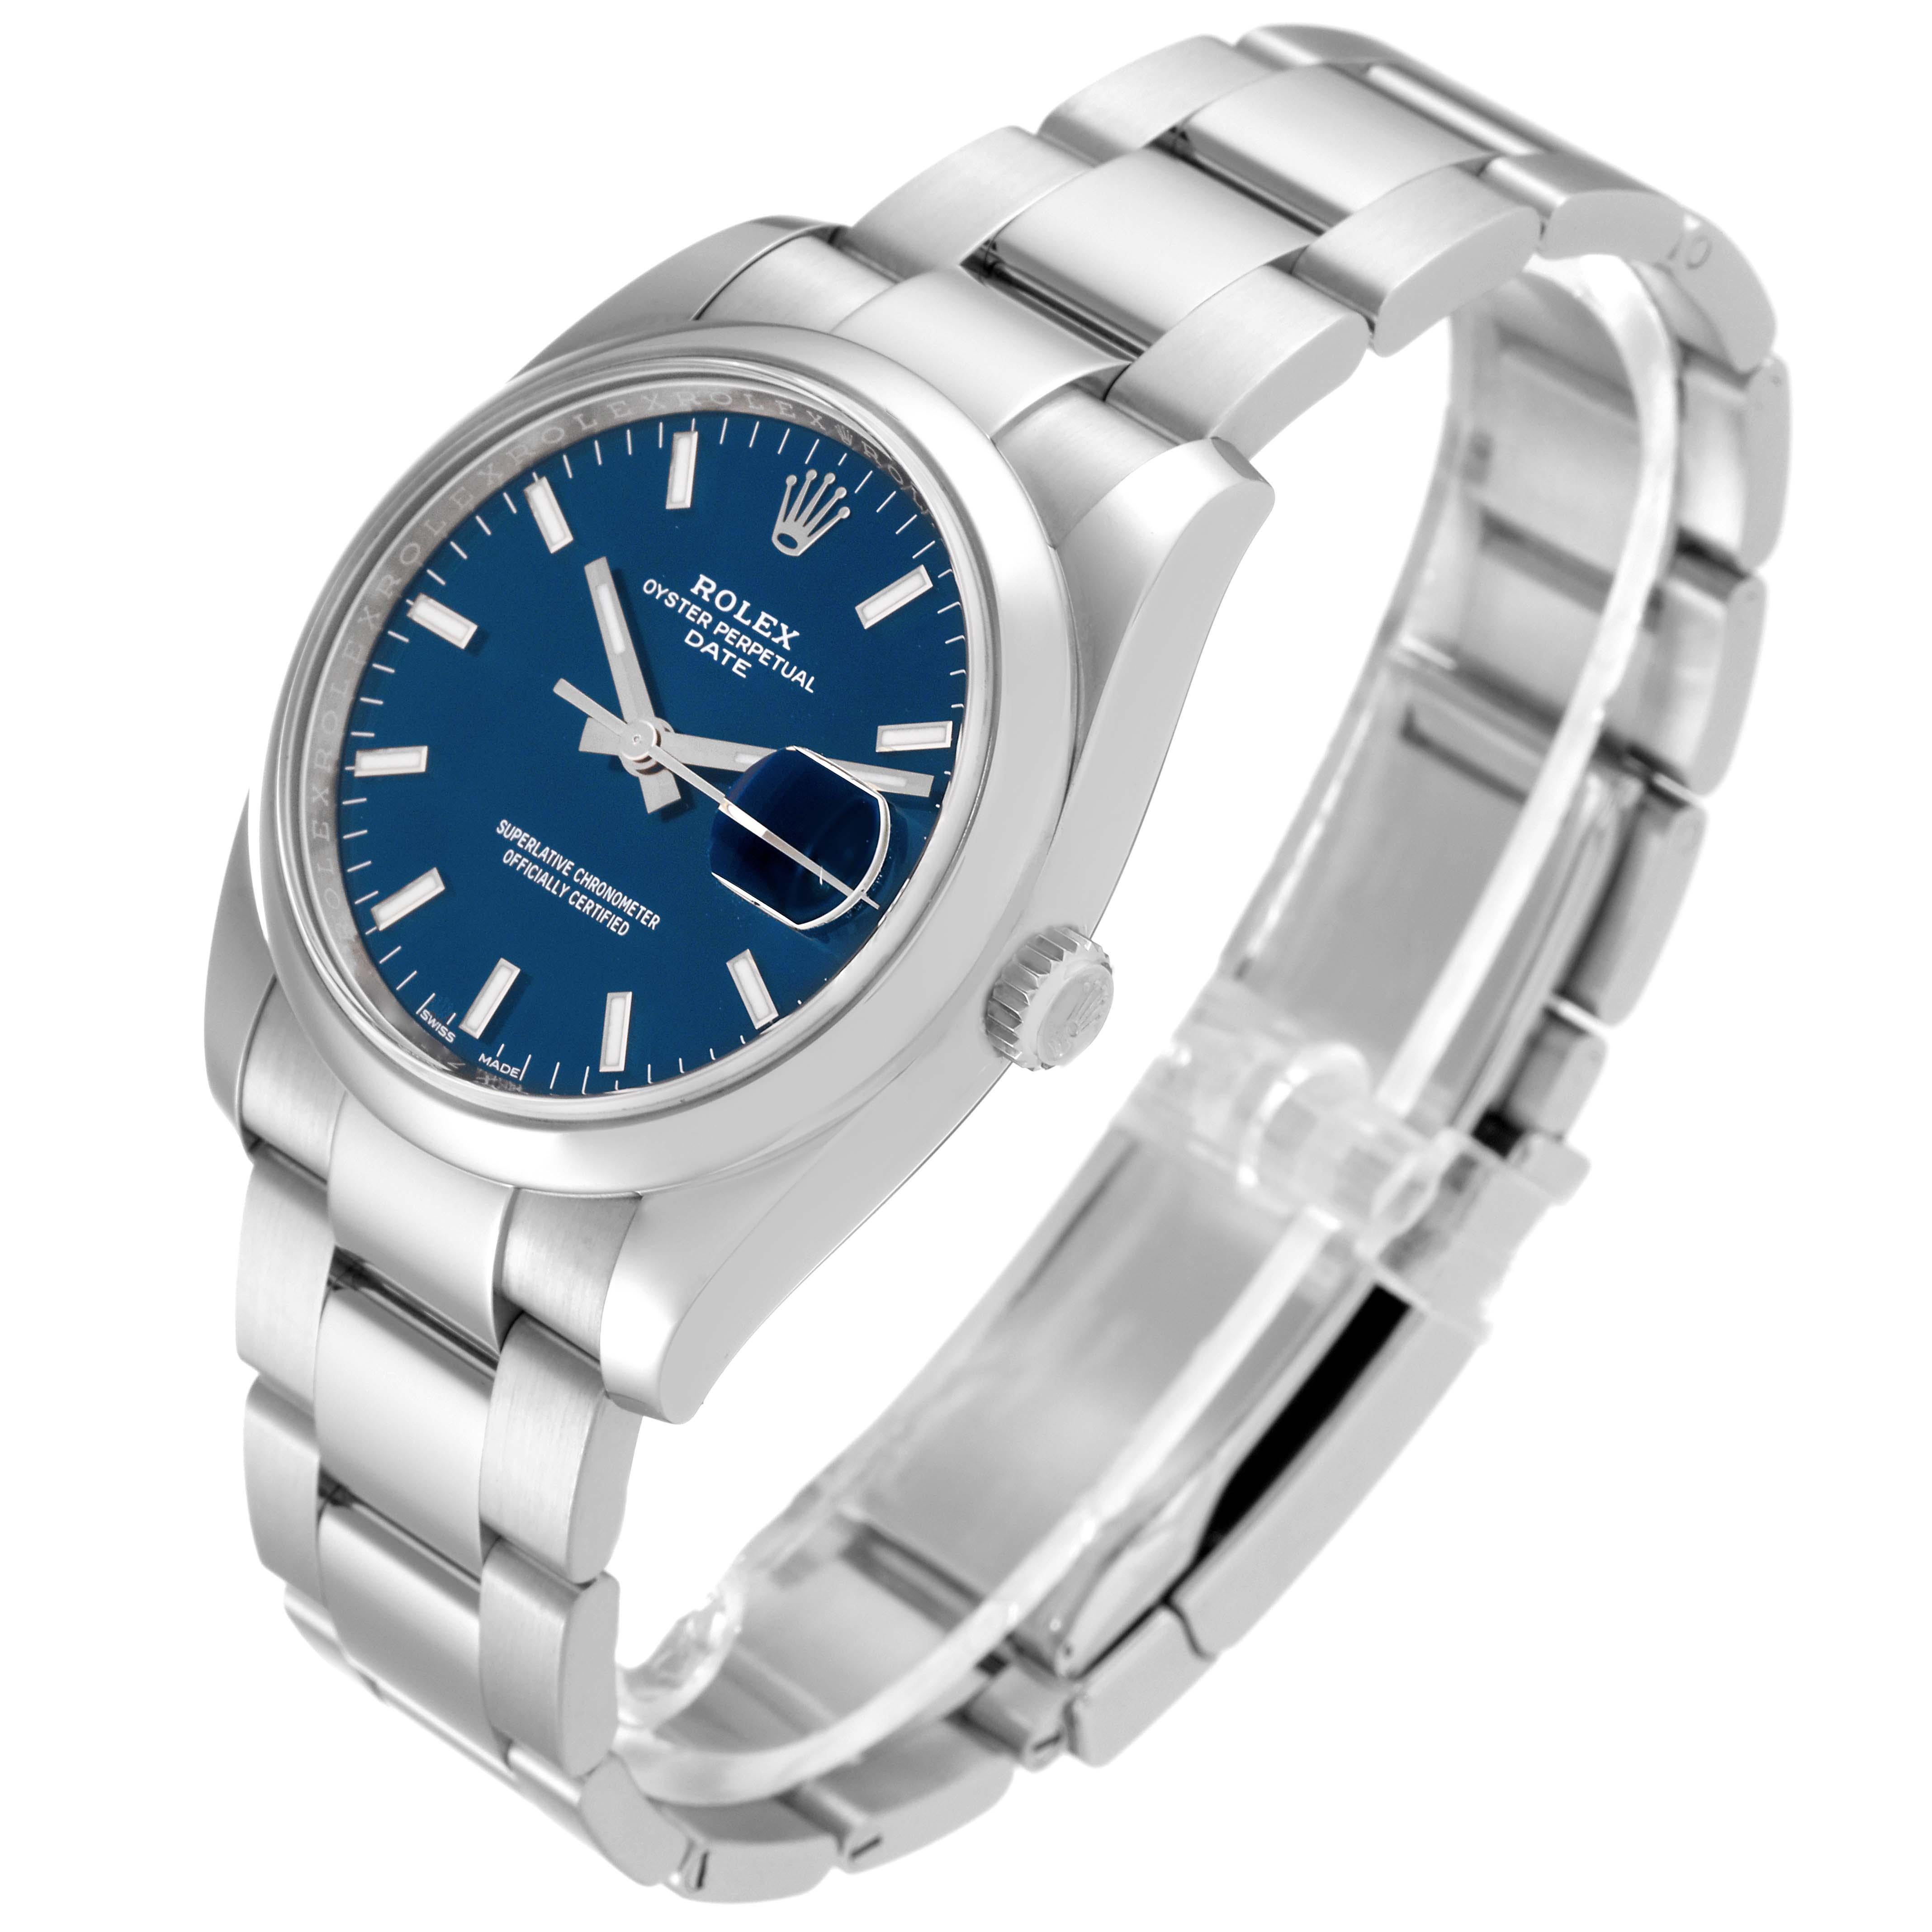 Rolex Date Acero Inoxidable Esfera Azul Reloj Caballero 115200 Caja Tarjeta en venta 2